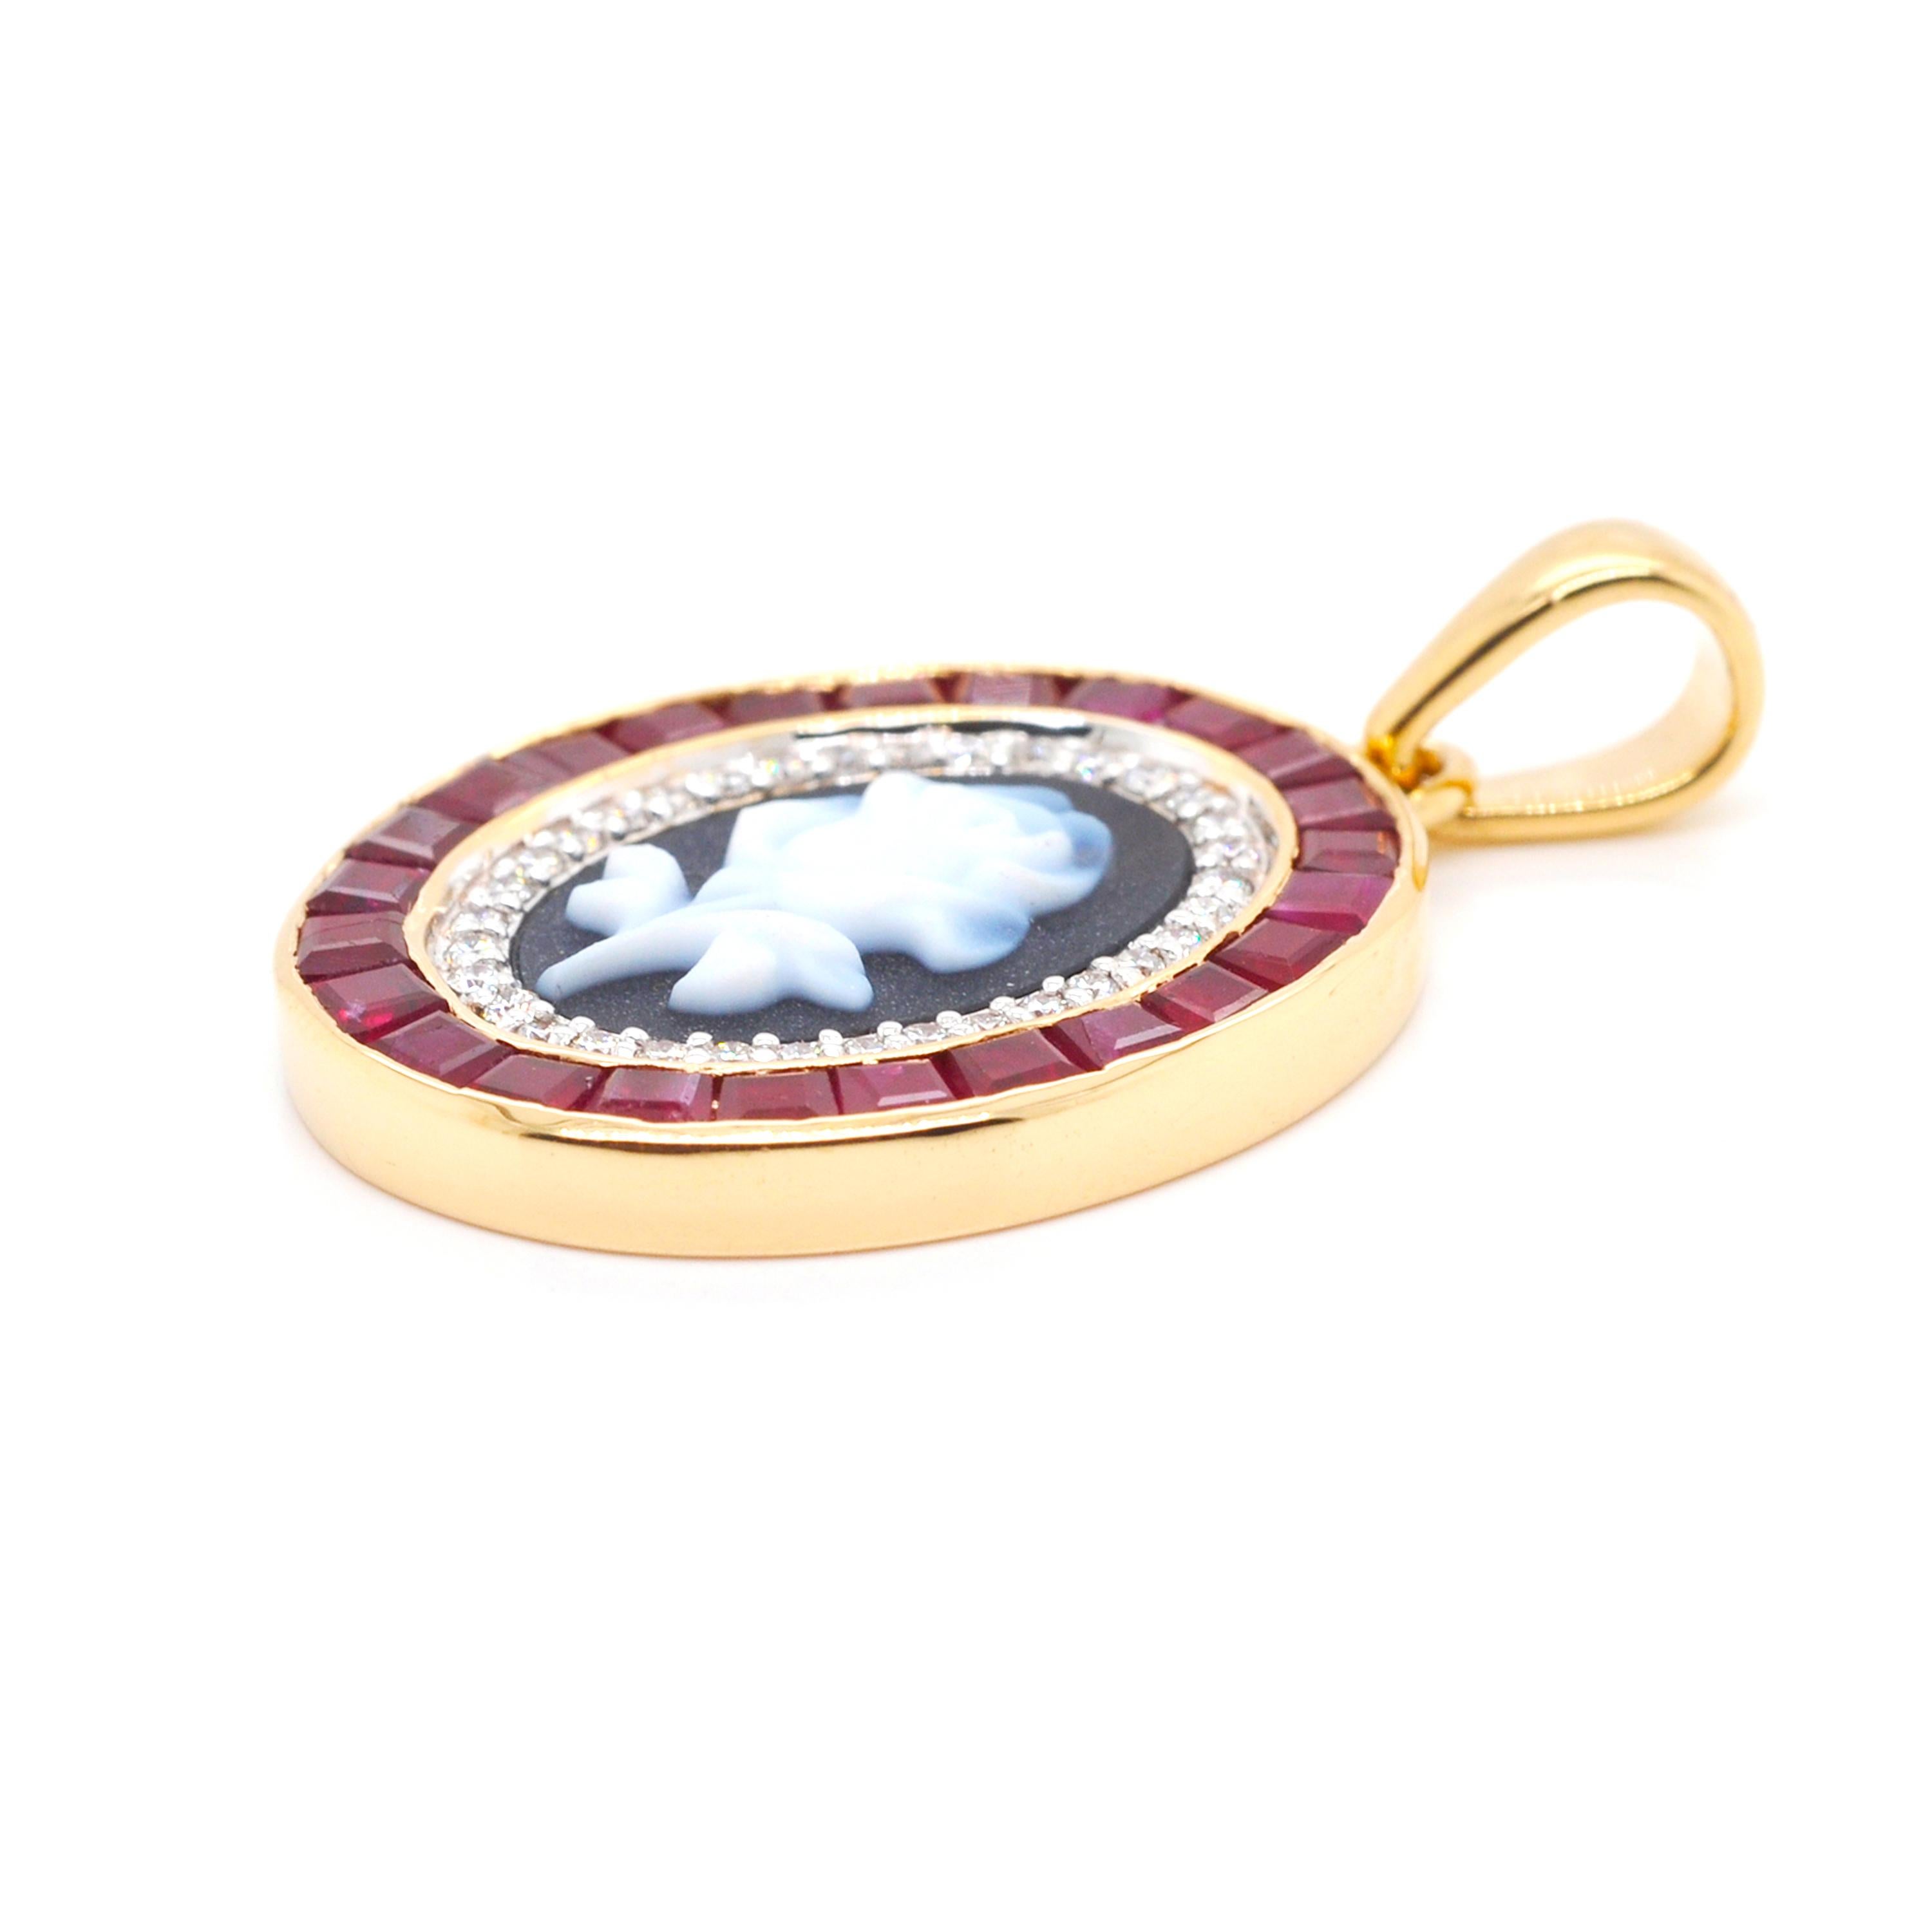 Contemporary 18 Karat Gold Calibre Cut Burma Ruby Diamond Rose Agate Cameo Pendant Necklace